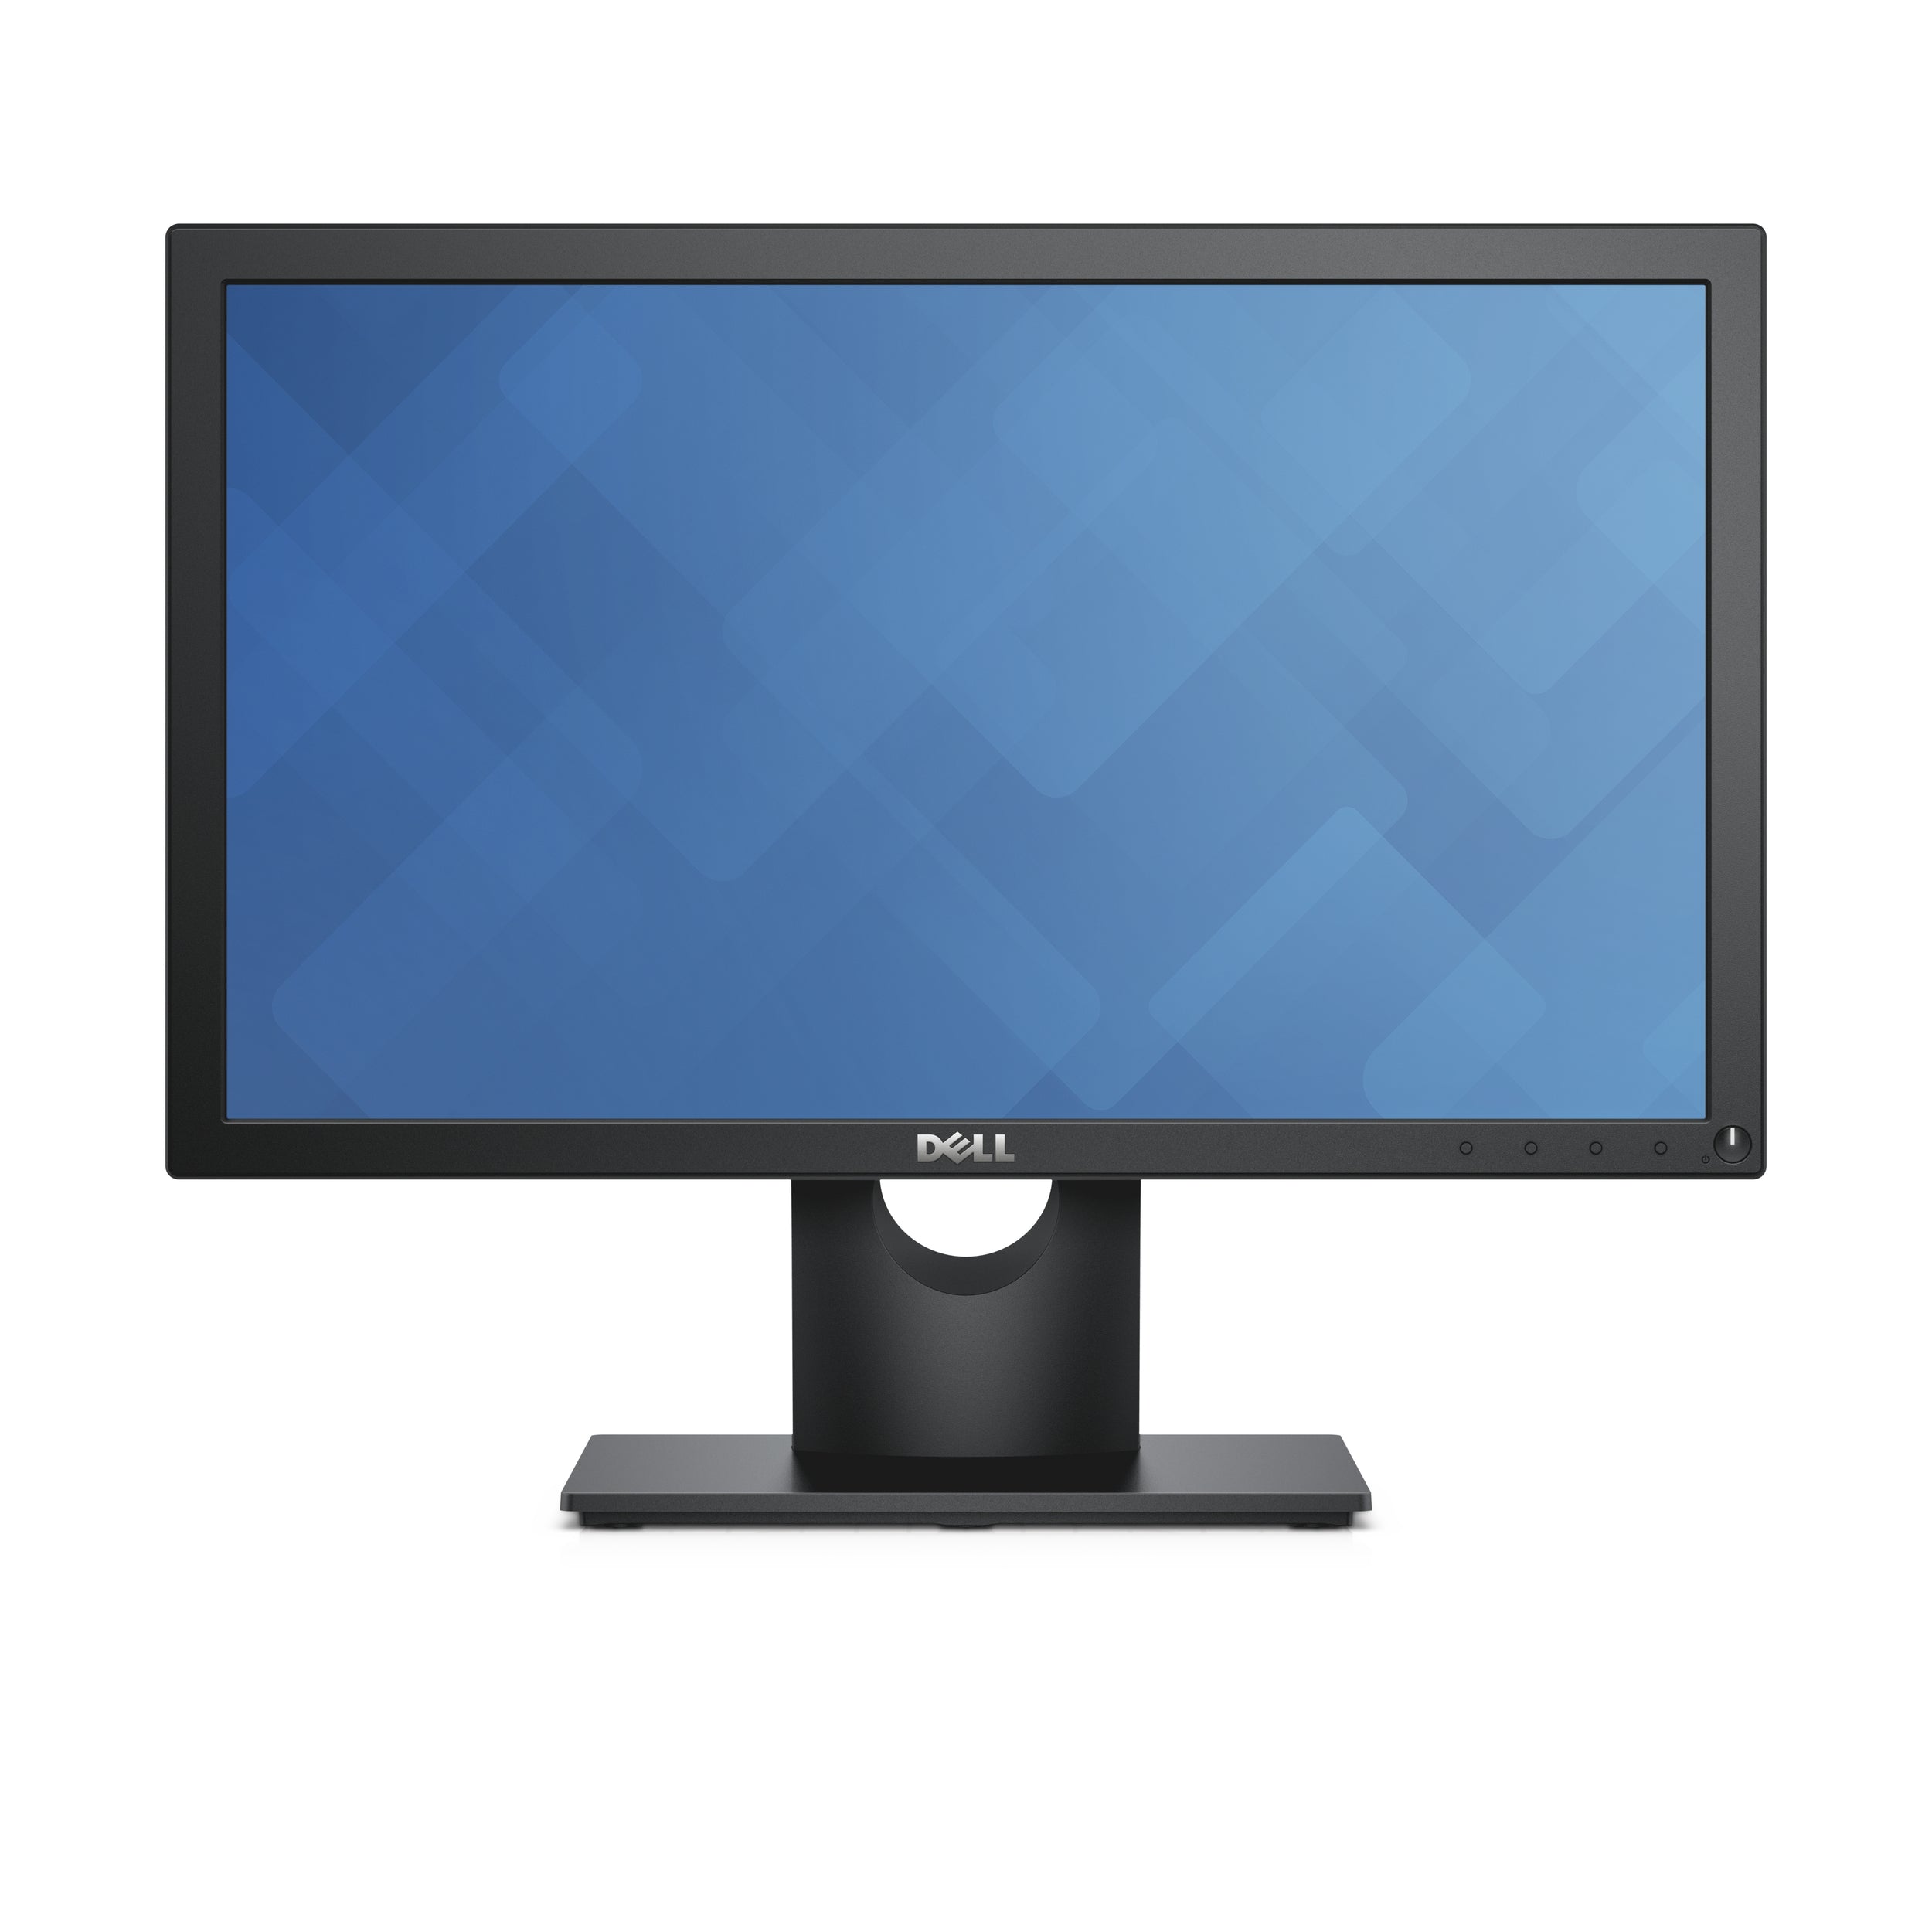 Monitor Dell E1916Hv 18.5 Pulgadas 250 Cd / M² 1366 X 768 Pixeles Ms Negro